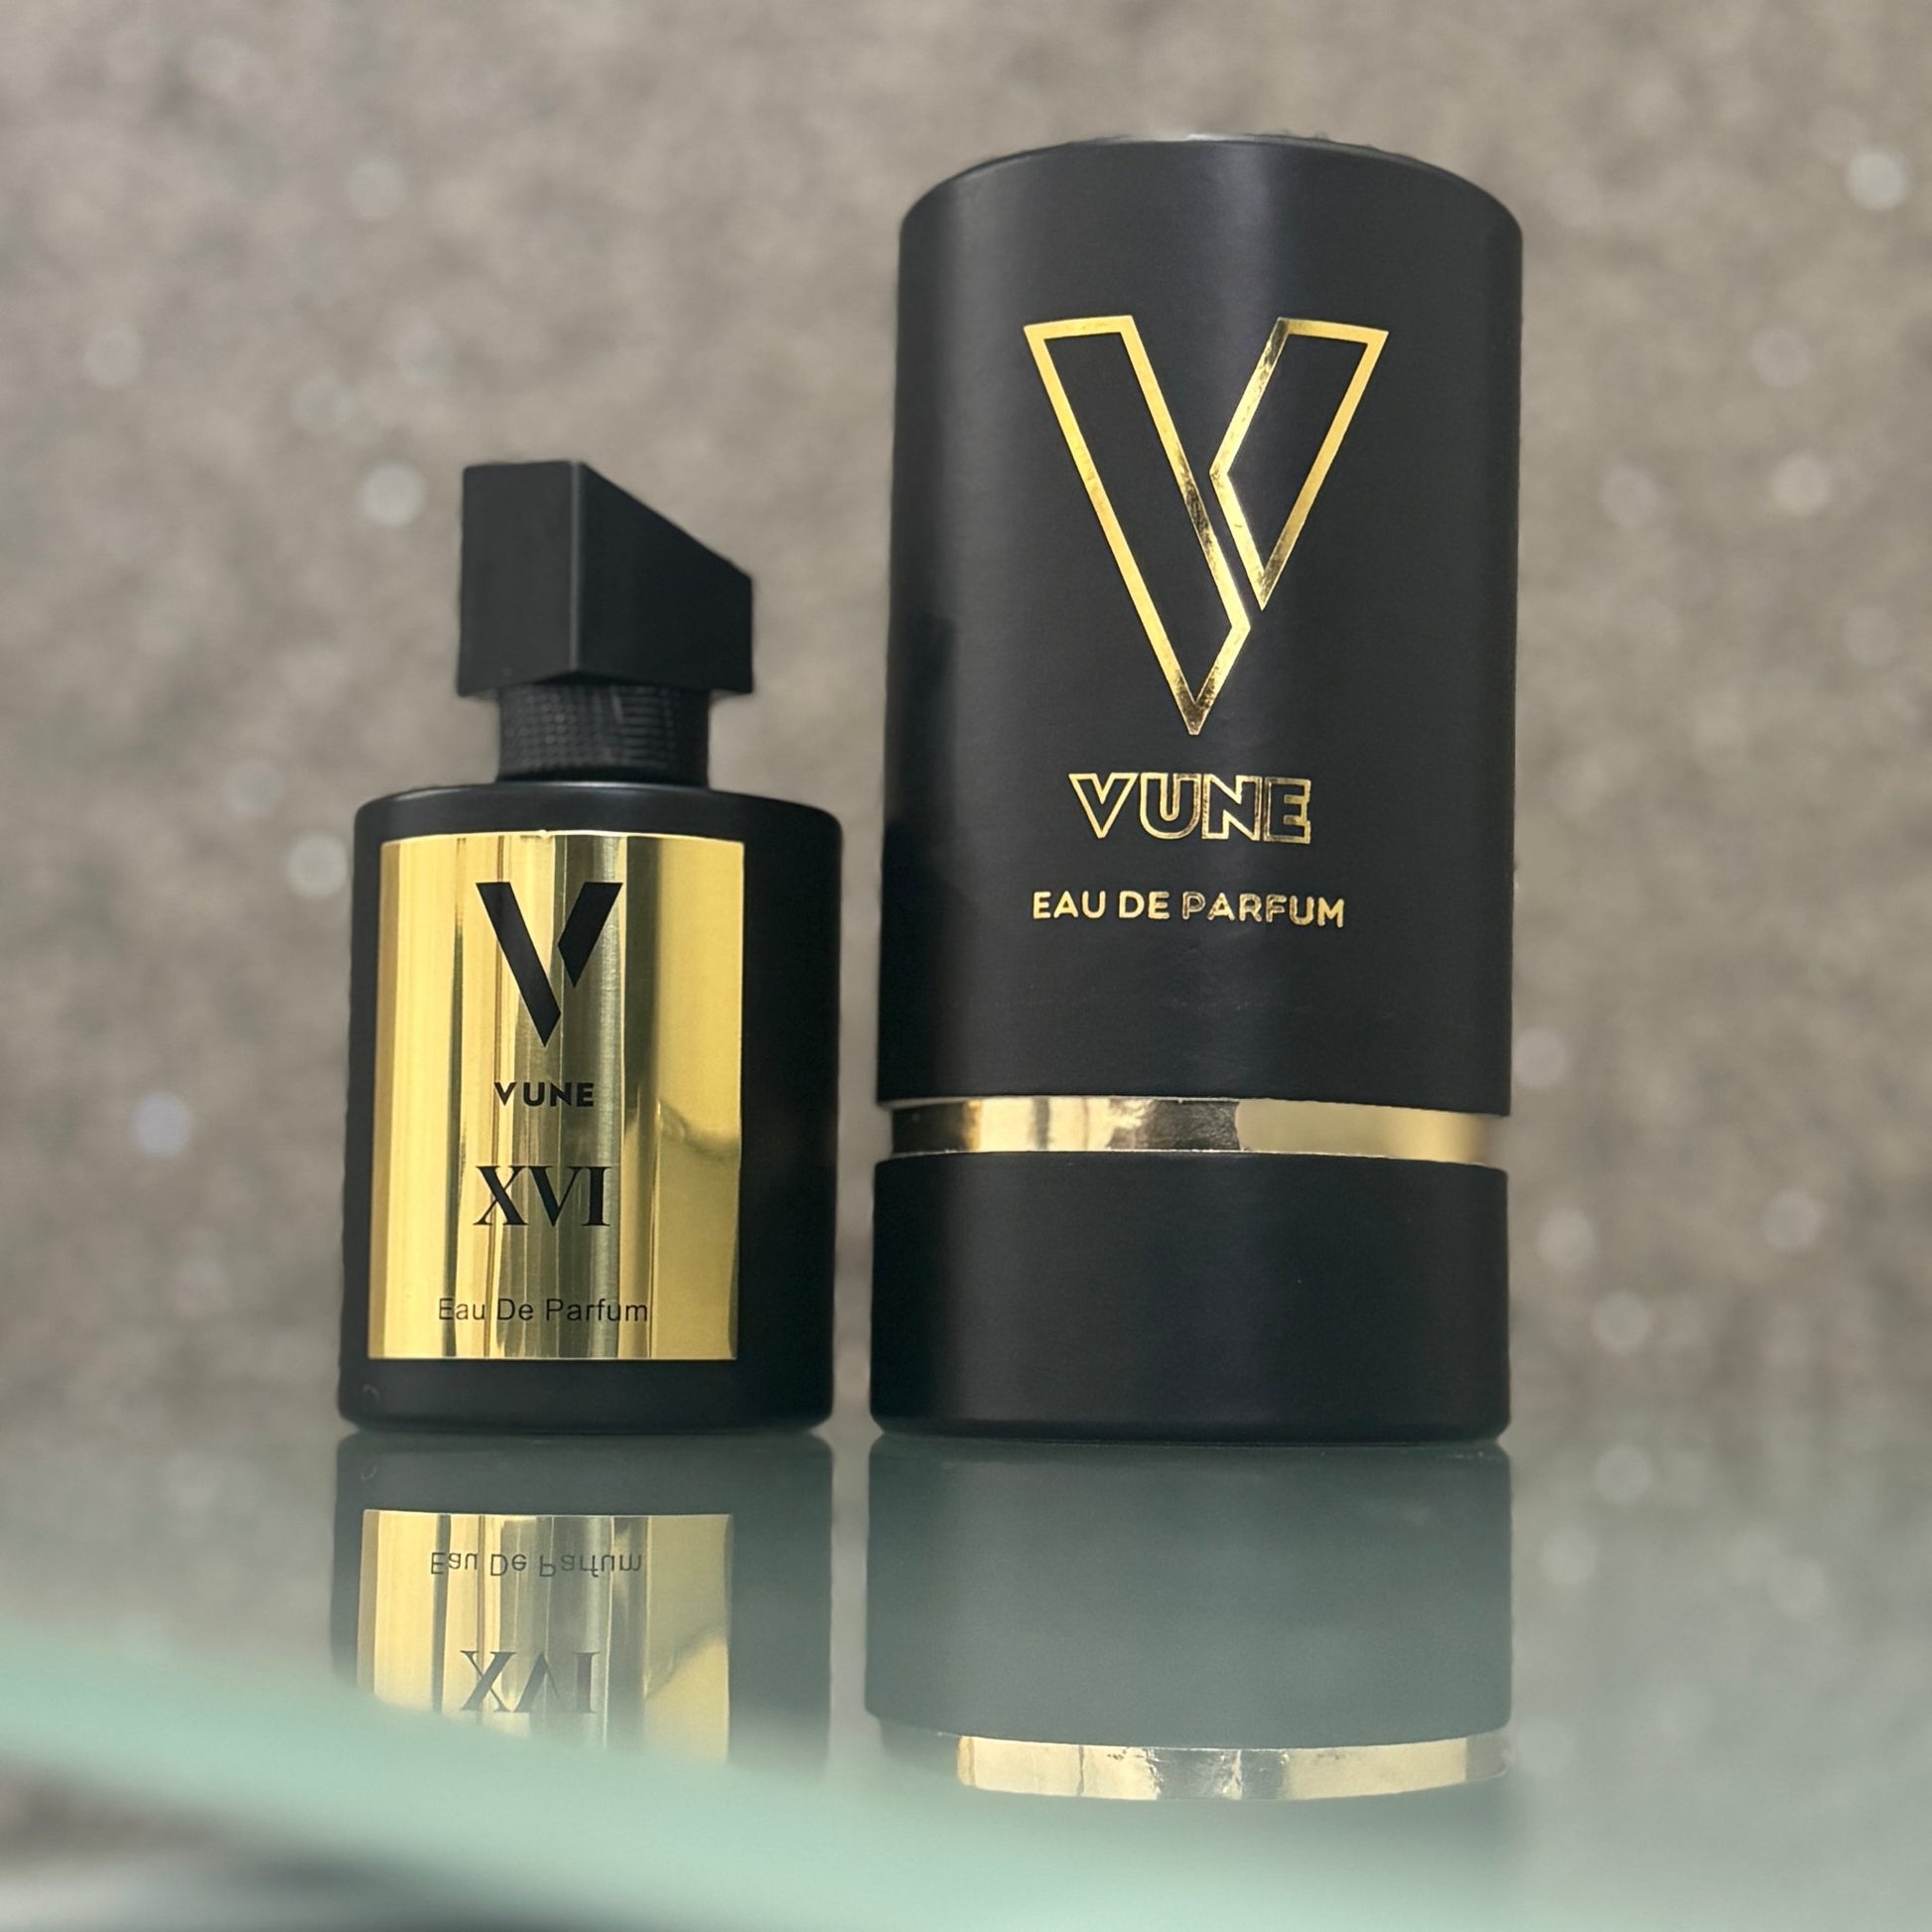 XIV 50ml Eau De Parfum - Vune Essence